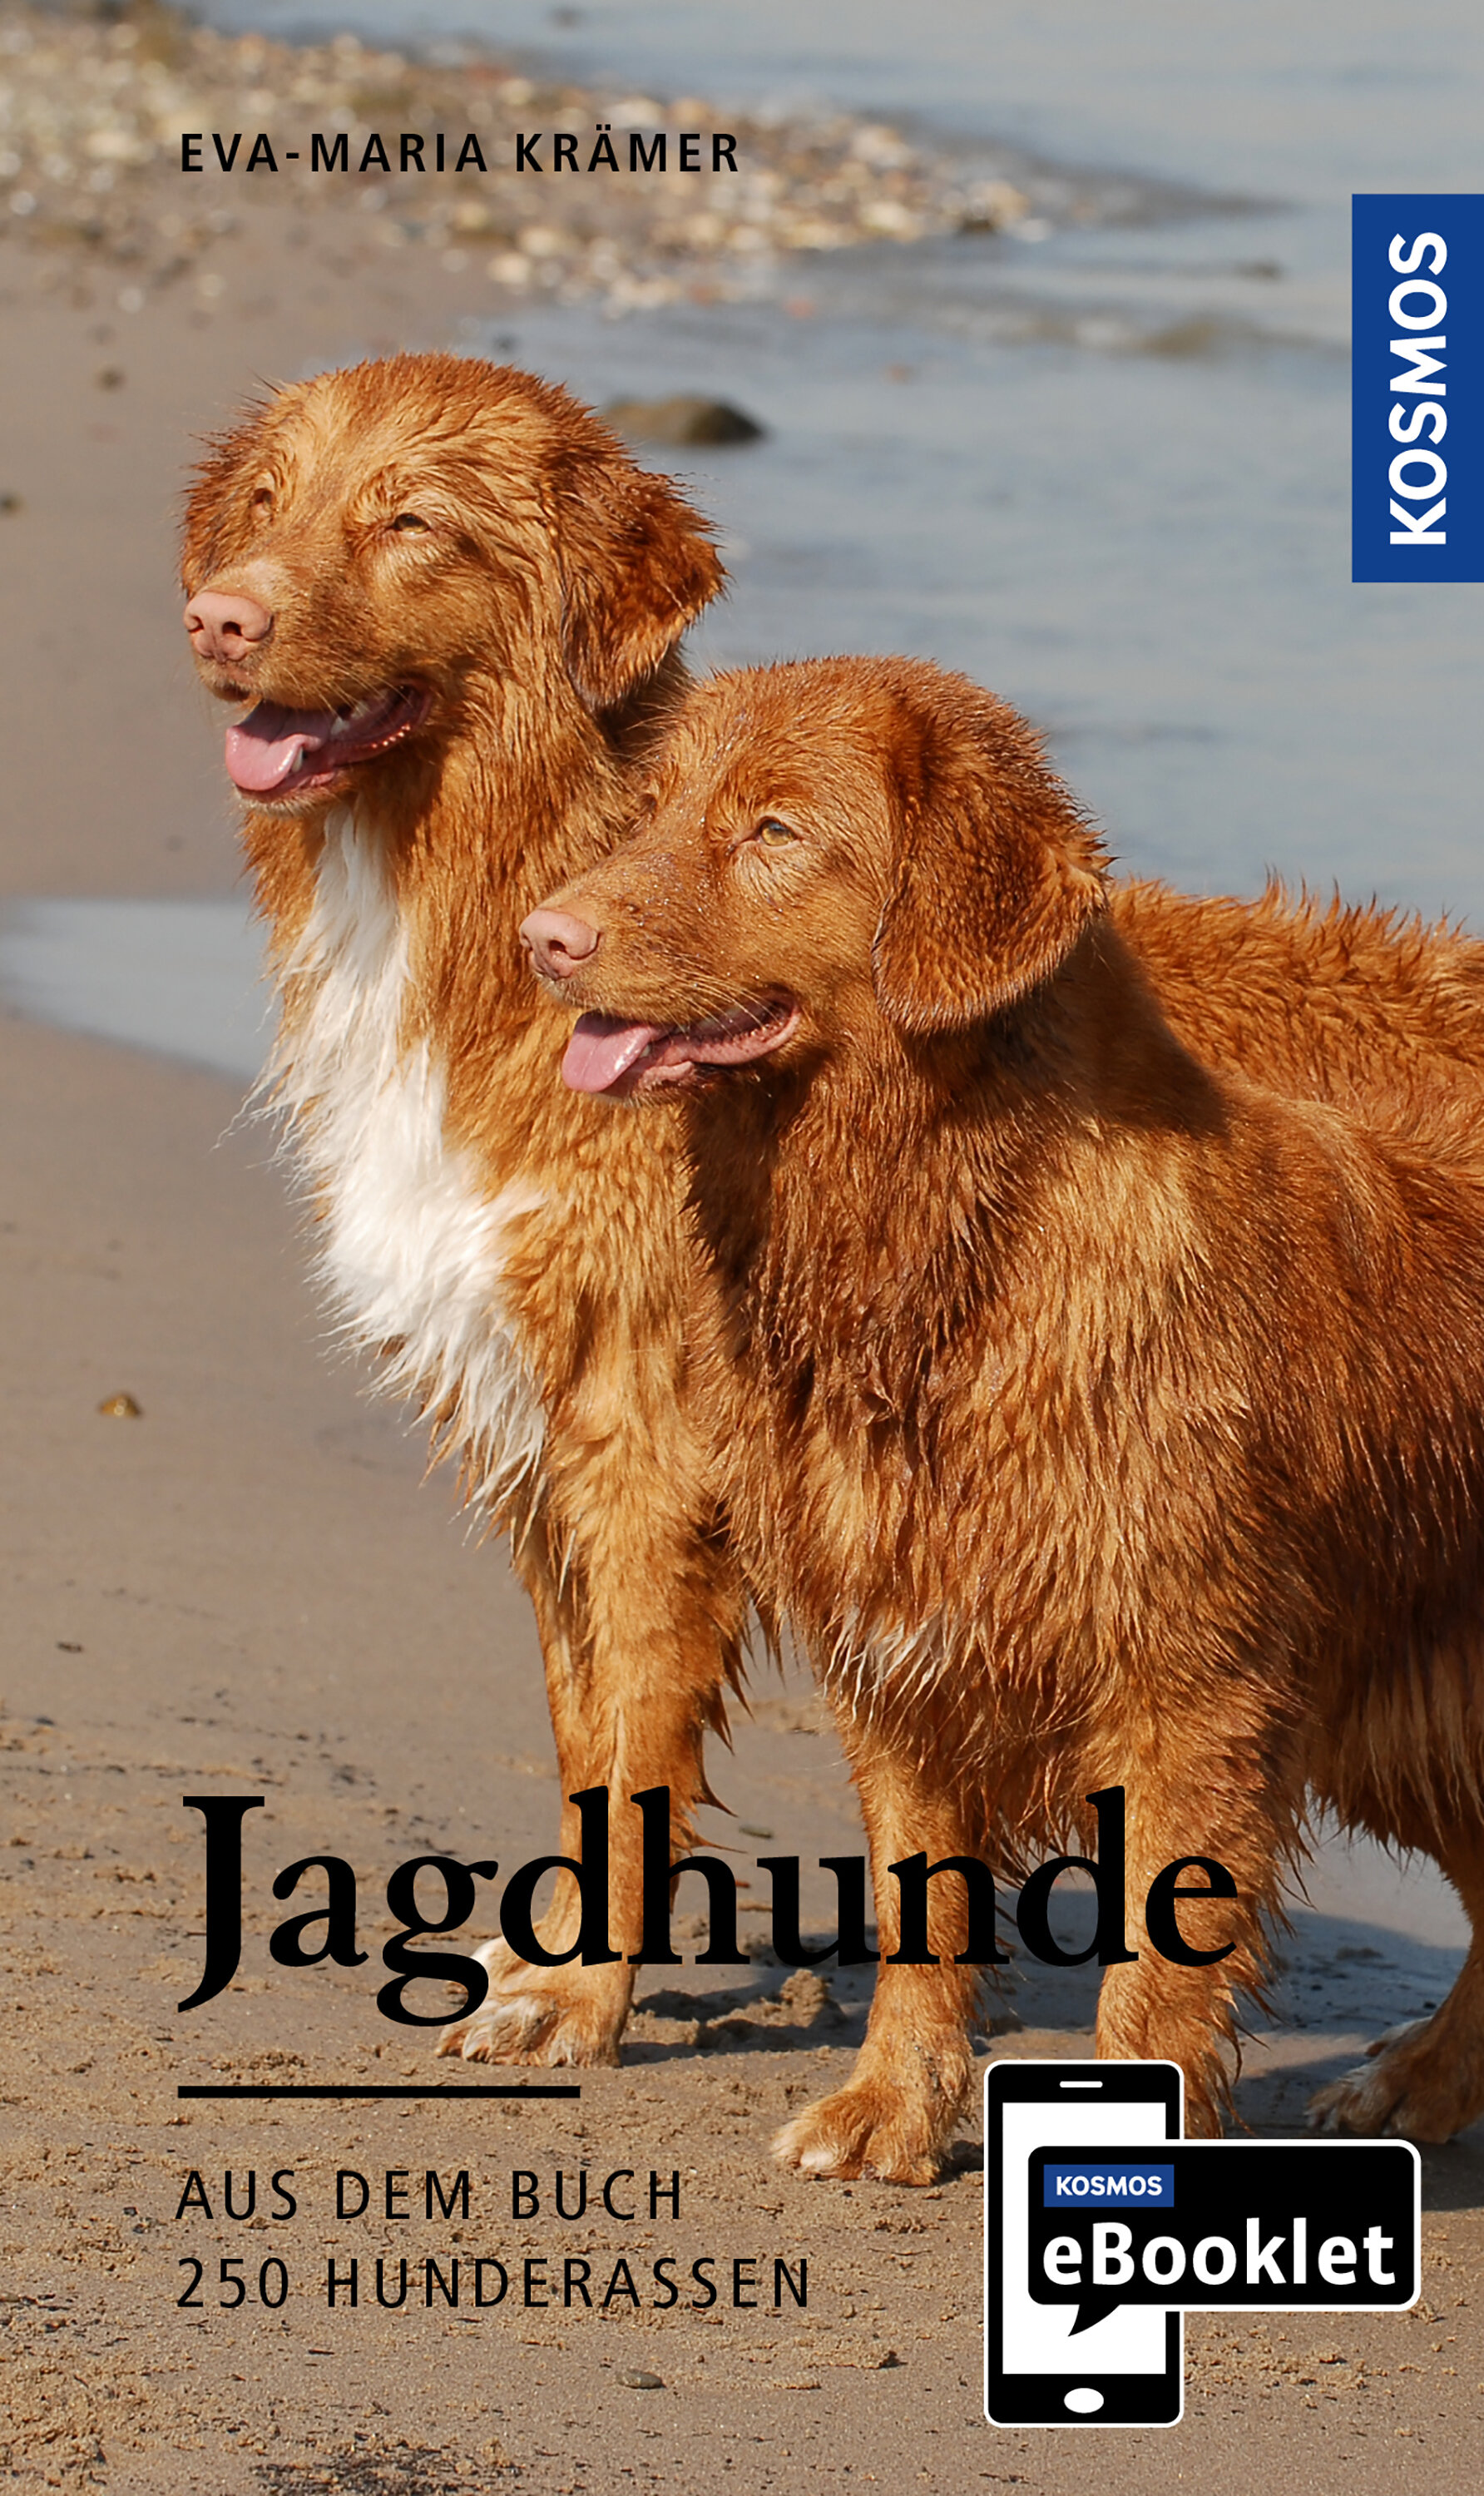 KOSMOS eBooklet: Jagdhunde - Ursprung  Wesen  Haltung